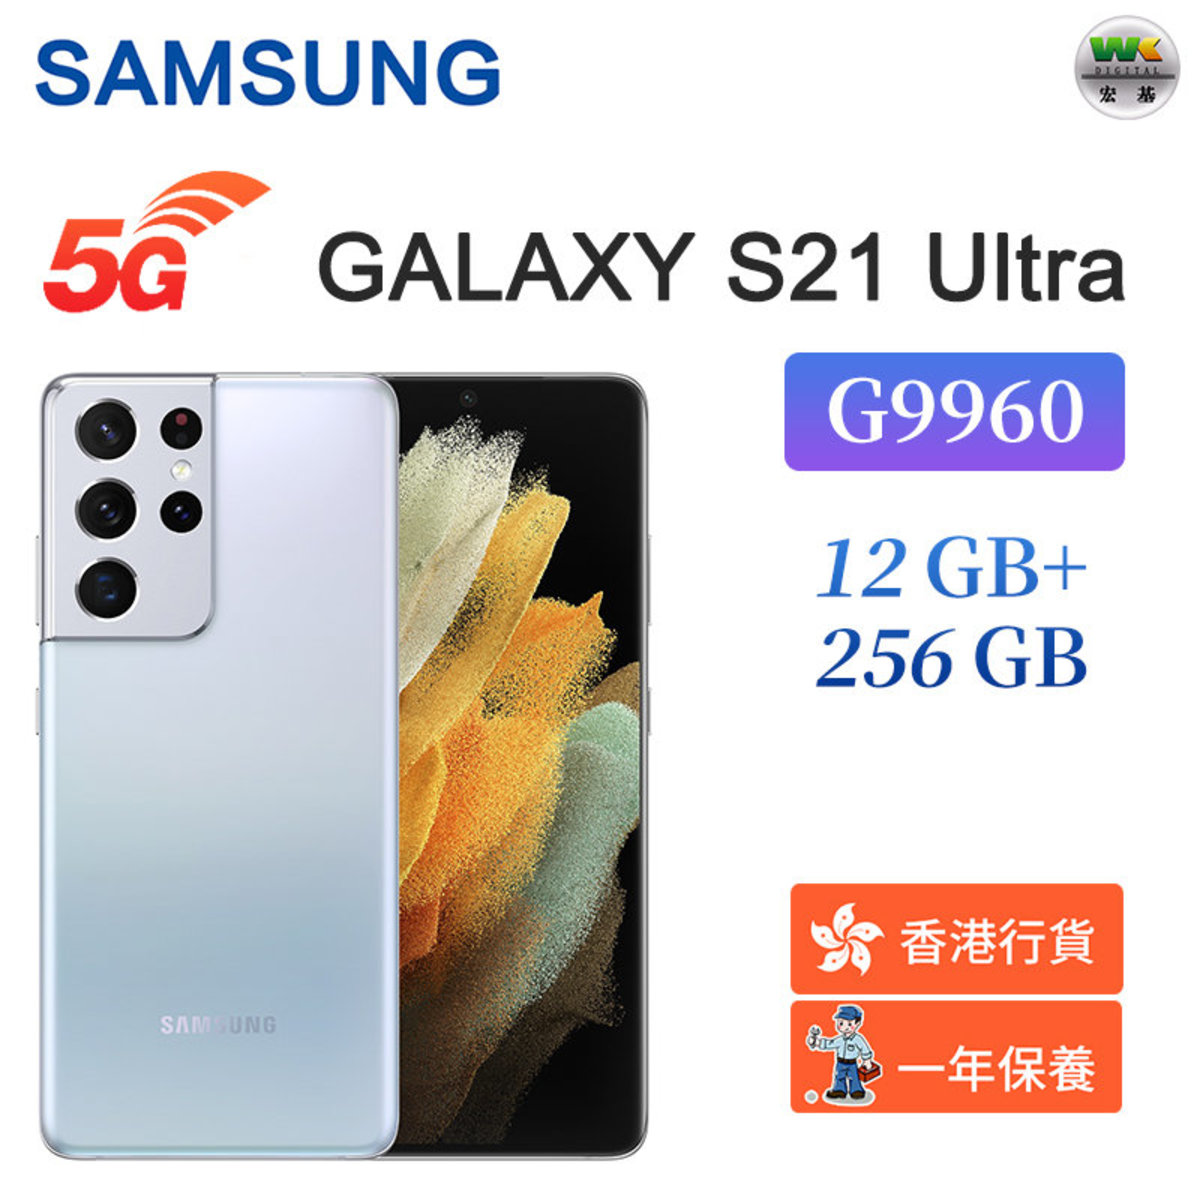 SAMSUNG GALAXY S21 ULTRA 256GB 12GB RAM BLACK RD$ 28,500